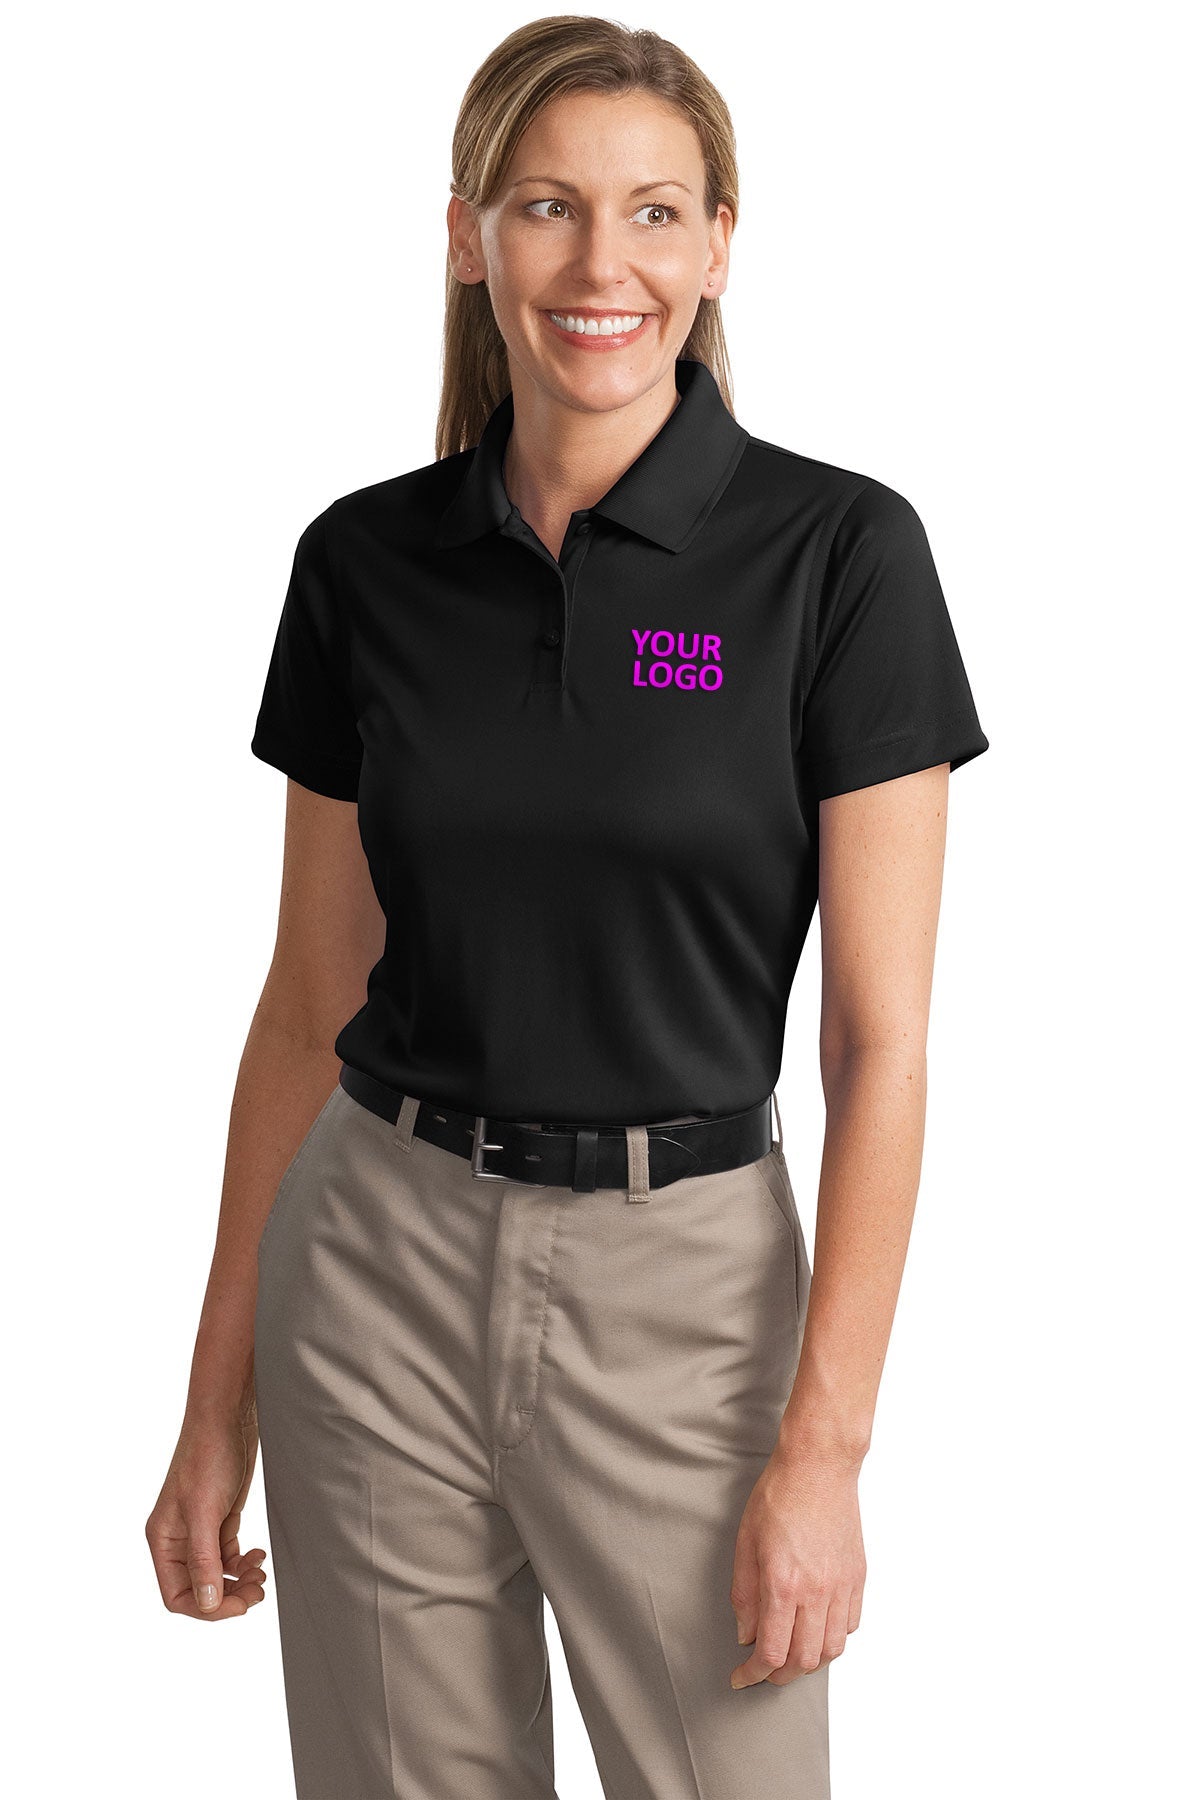 CornerStone Black CS413 polo shirts with company logo